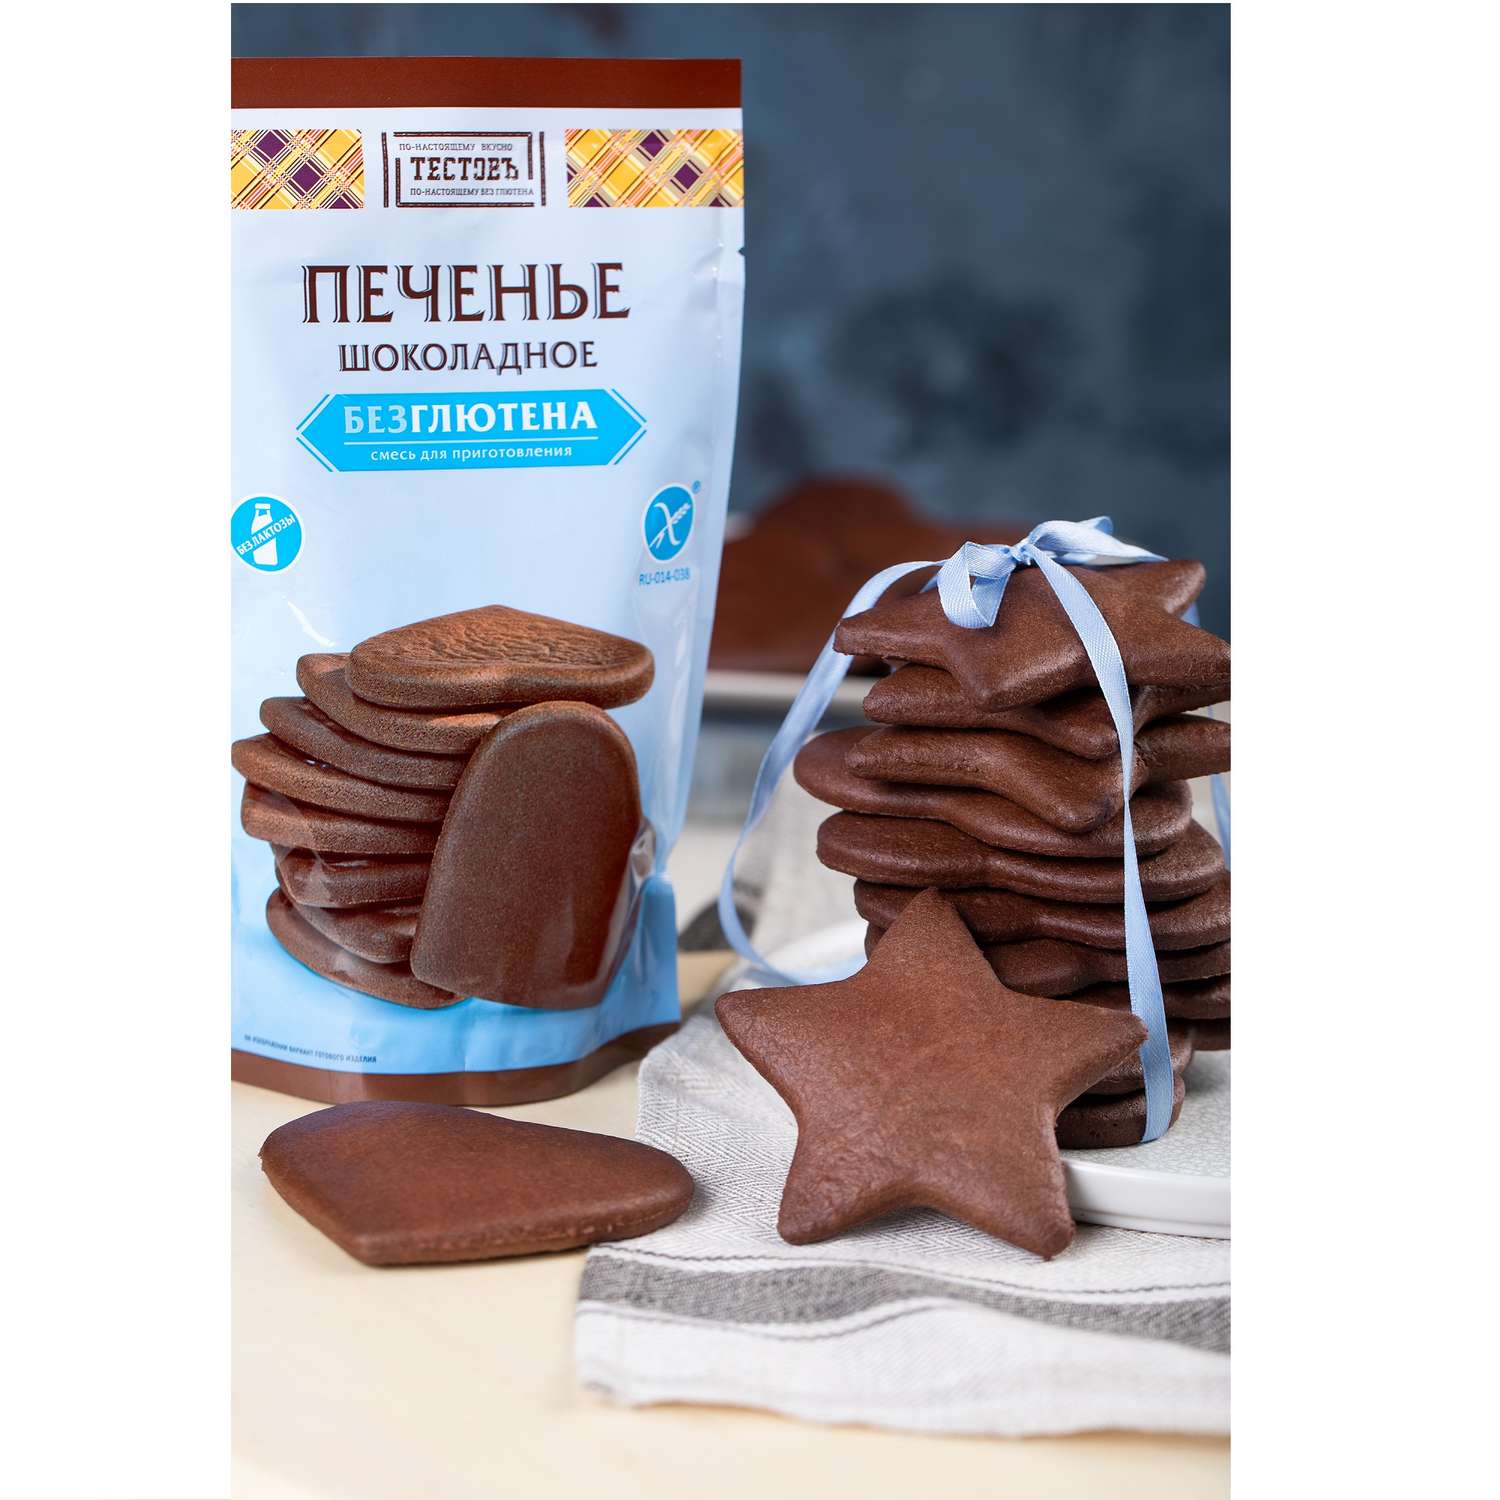 Смесь для выпечки ТЕСТОВЪ Печенья шоколадное без глютена 250 гр - фото 3